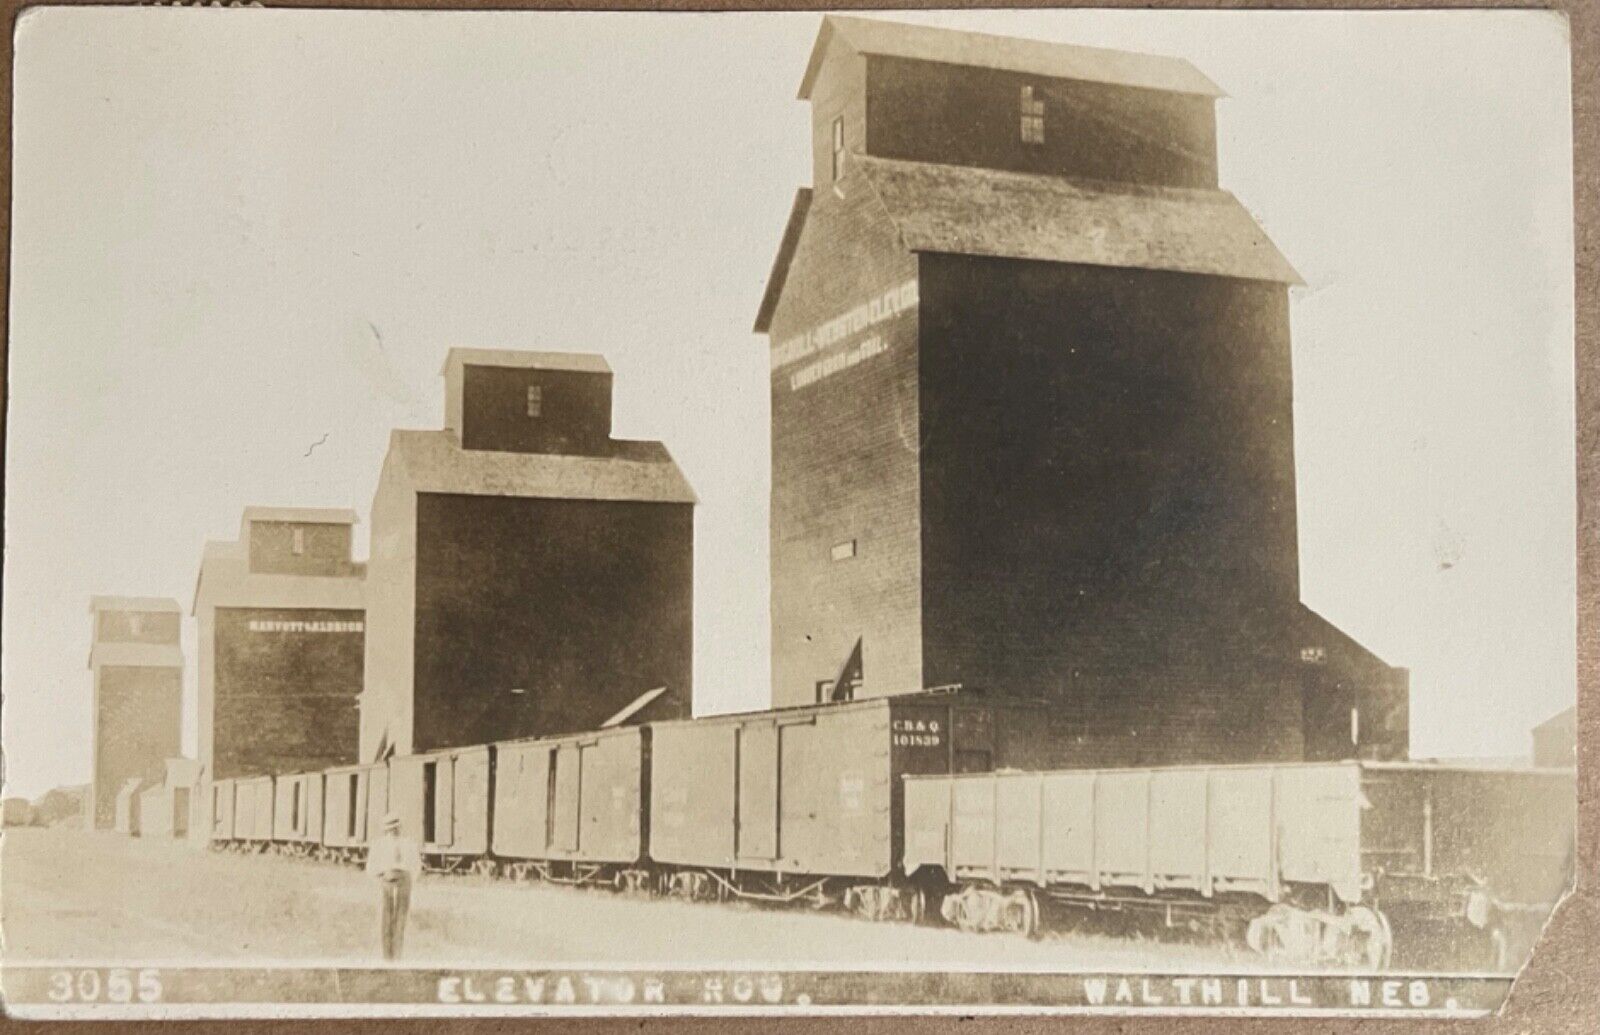 RPPC Walthill Nebraska Grain Elevators CB&Q Railroad Real Photo Postcard 1909